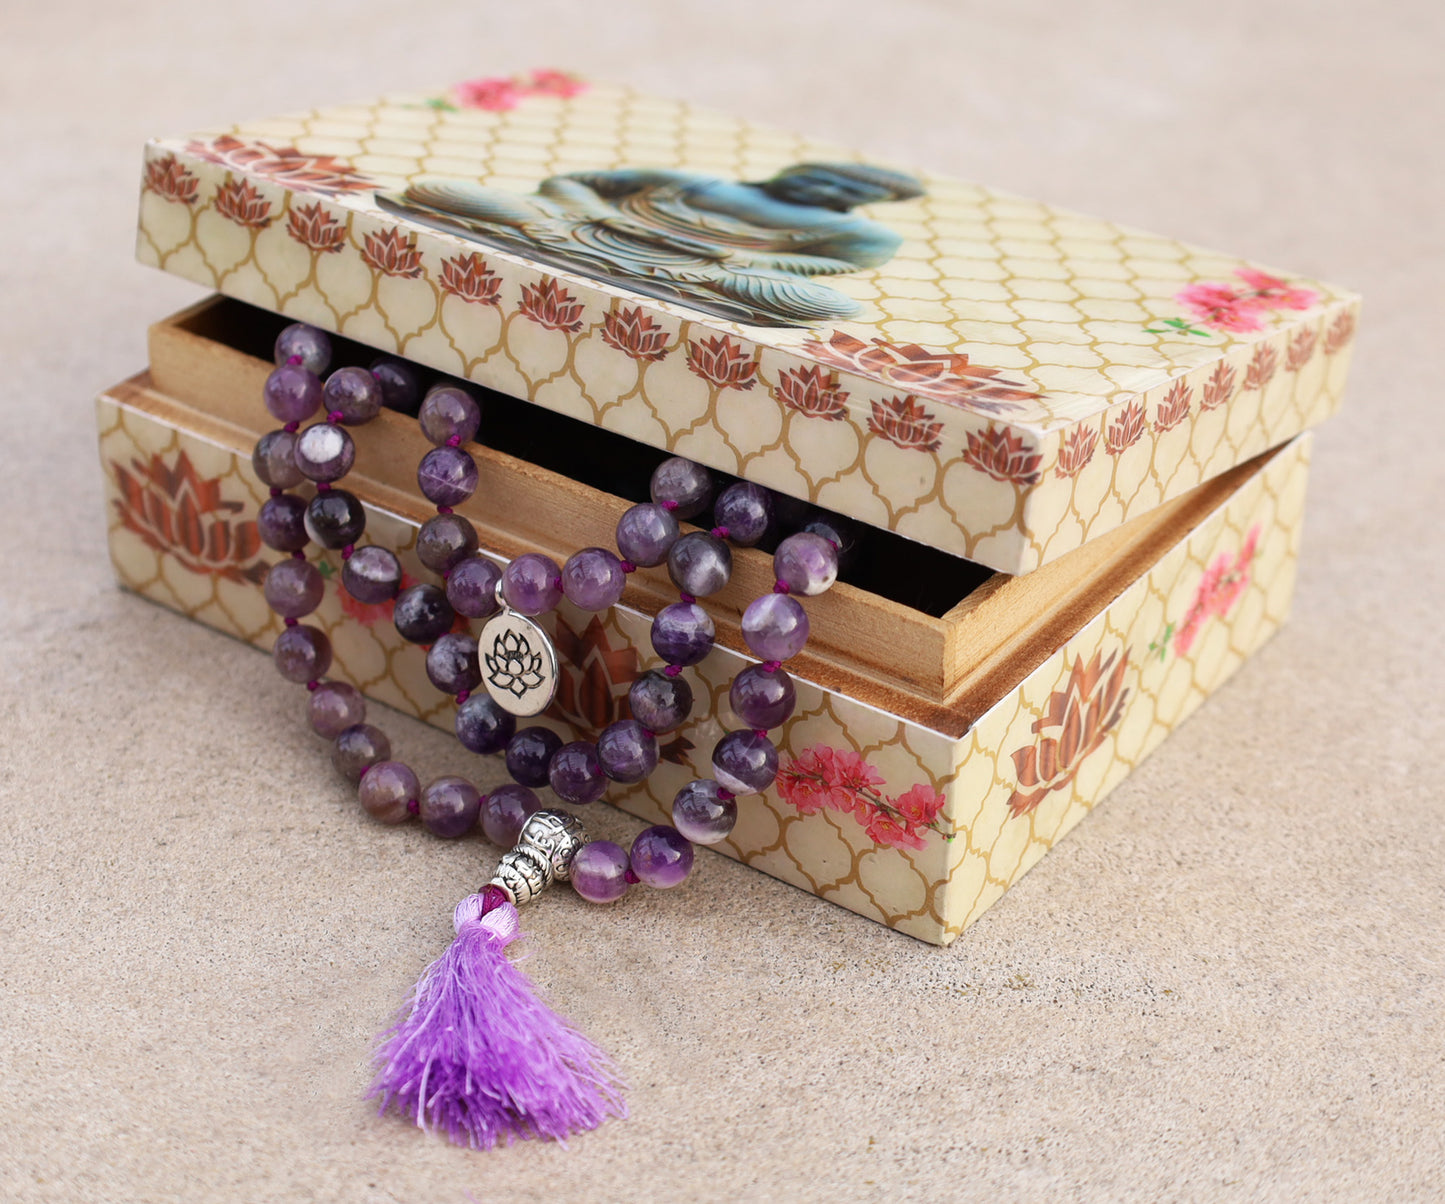 Tibetan Lotus Healing Stone 108 Beads Mala Prayer Meditation Yoga Chakra With Silver Guru Bead And Silver Spacers - Free Wooden Gift Box